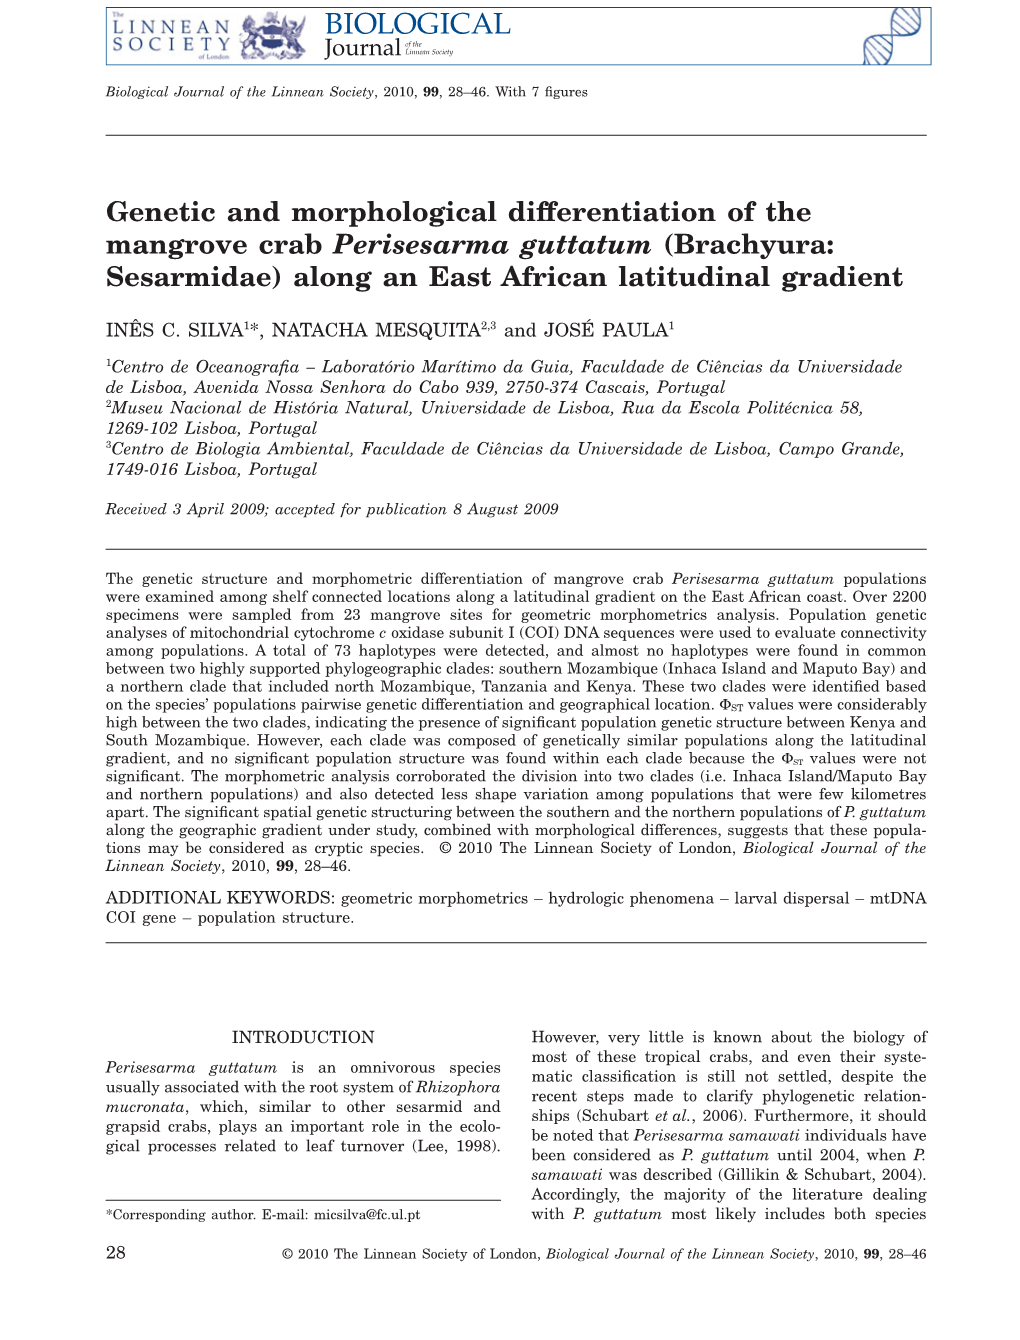 Genetic and Morphological Differentiation of the Mangrove Crab Perisesarma Guttatum (Brachyura: Sesarmidae) Along an East African Latitudinal Gradient